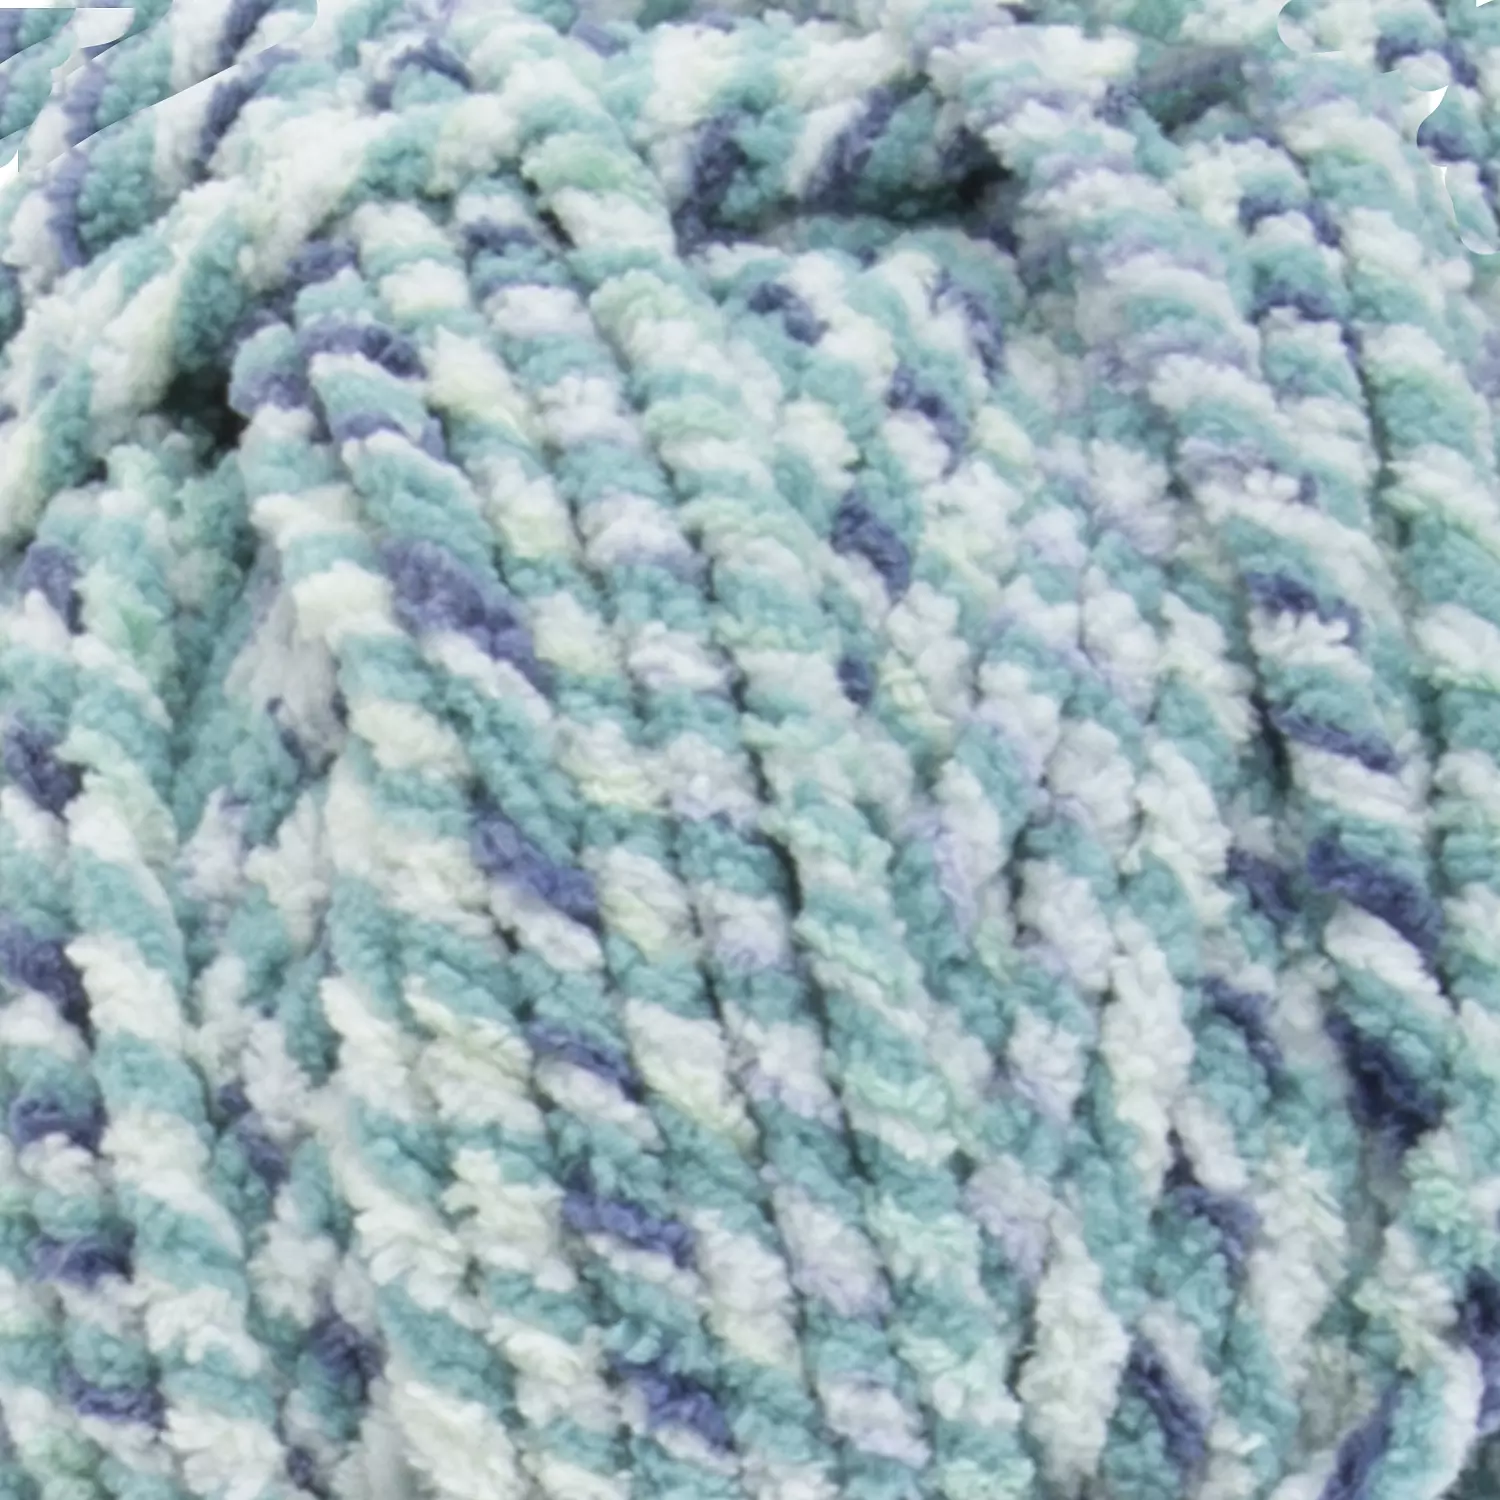 Making Waves Blanket Yarn - Bernat